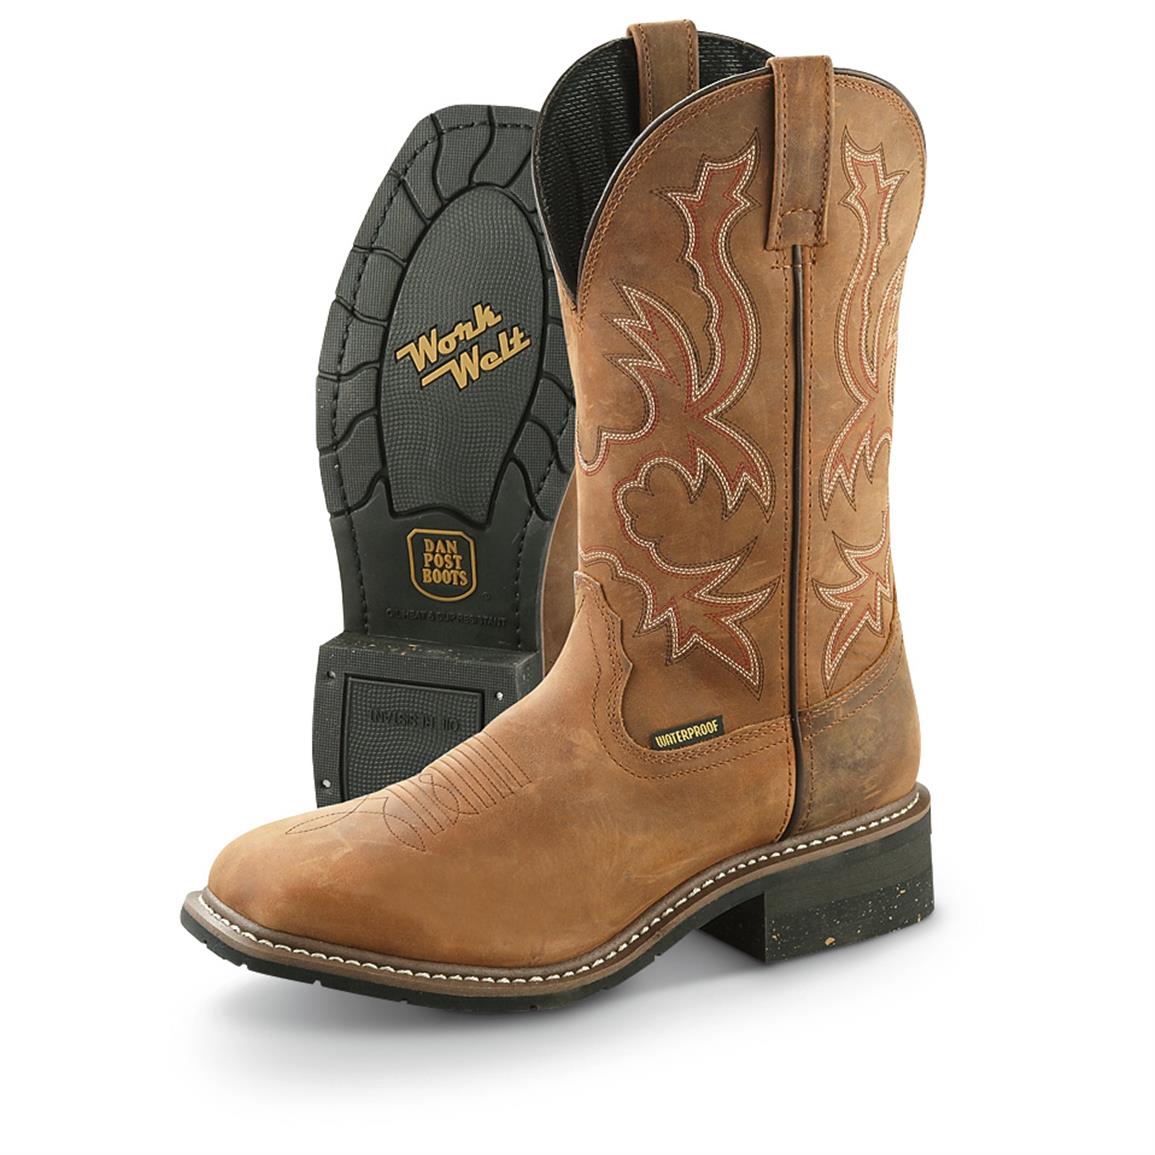 waterproof square toe cowboy boots